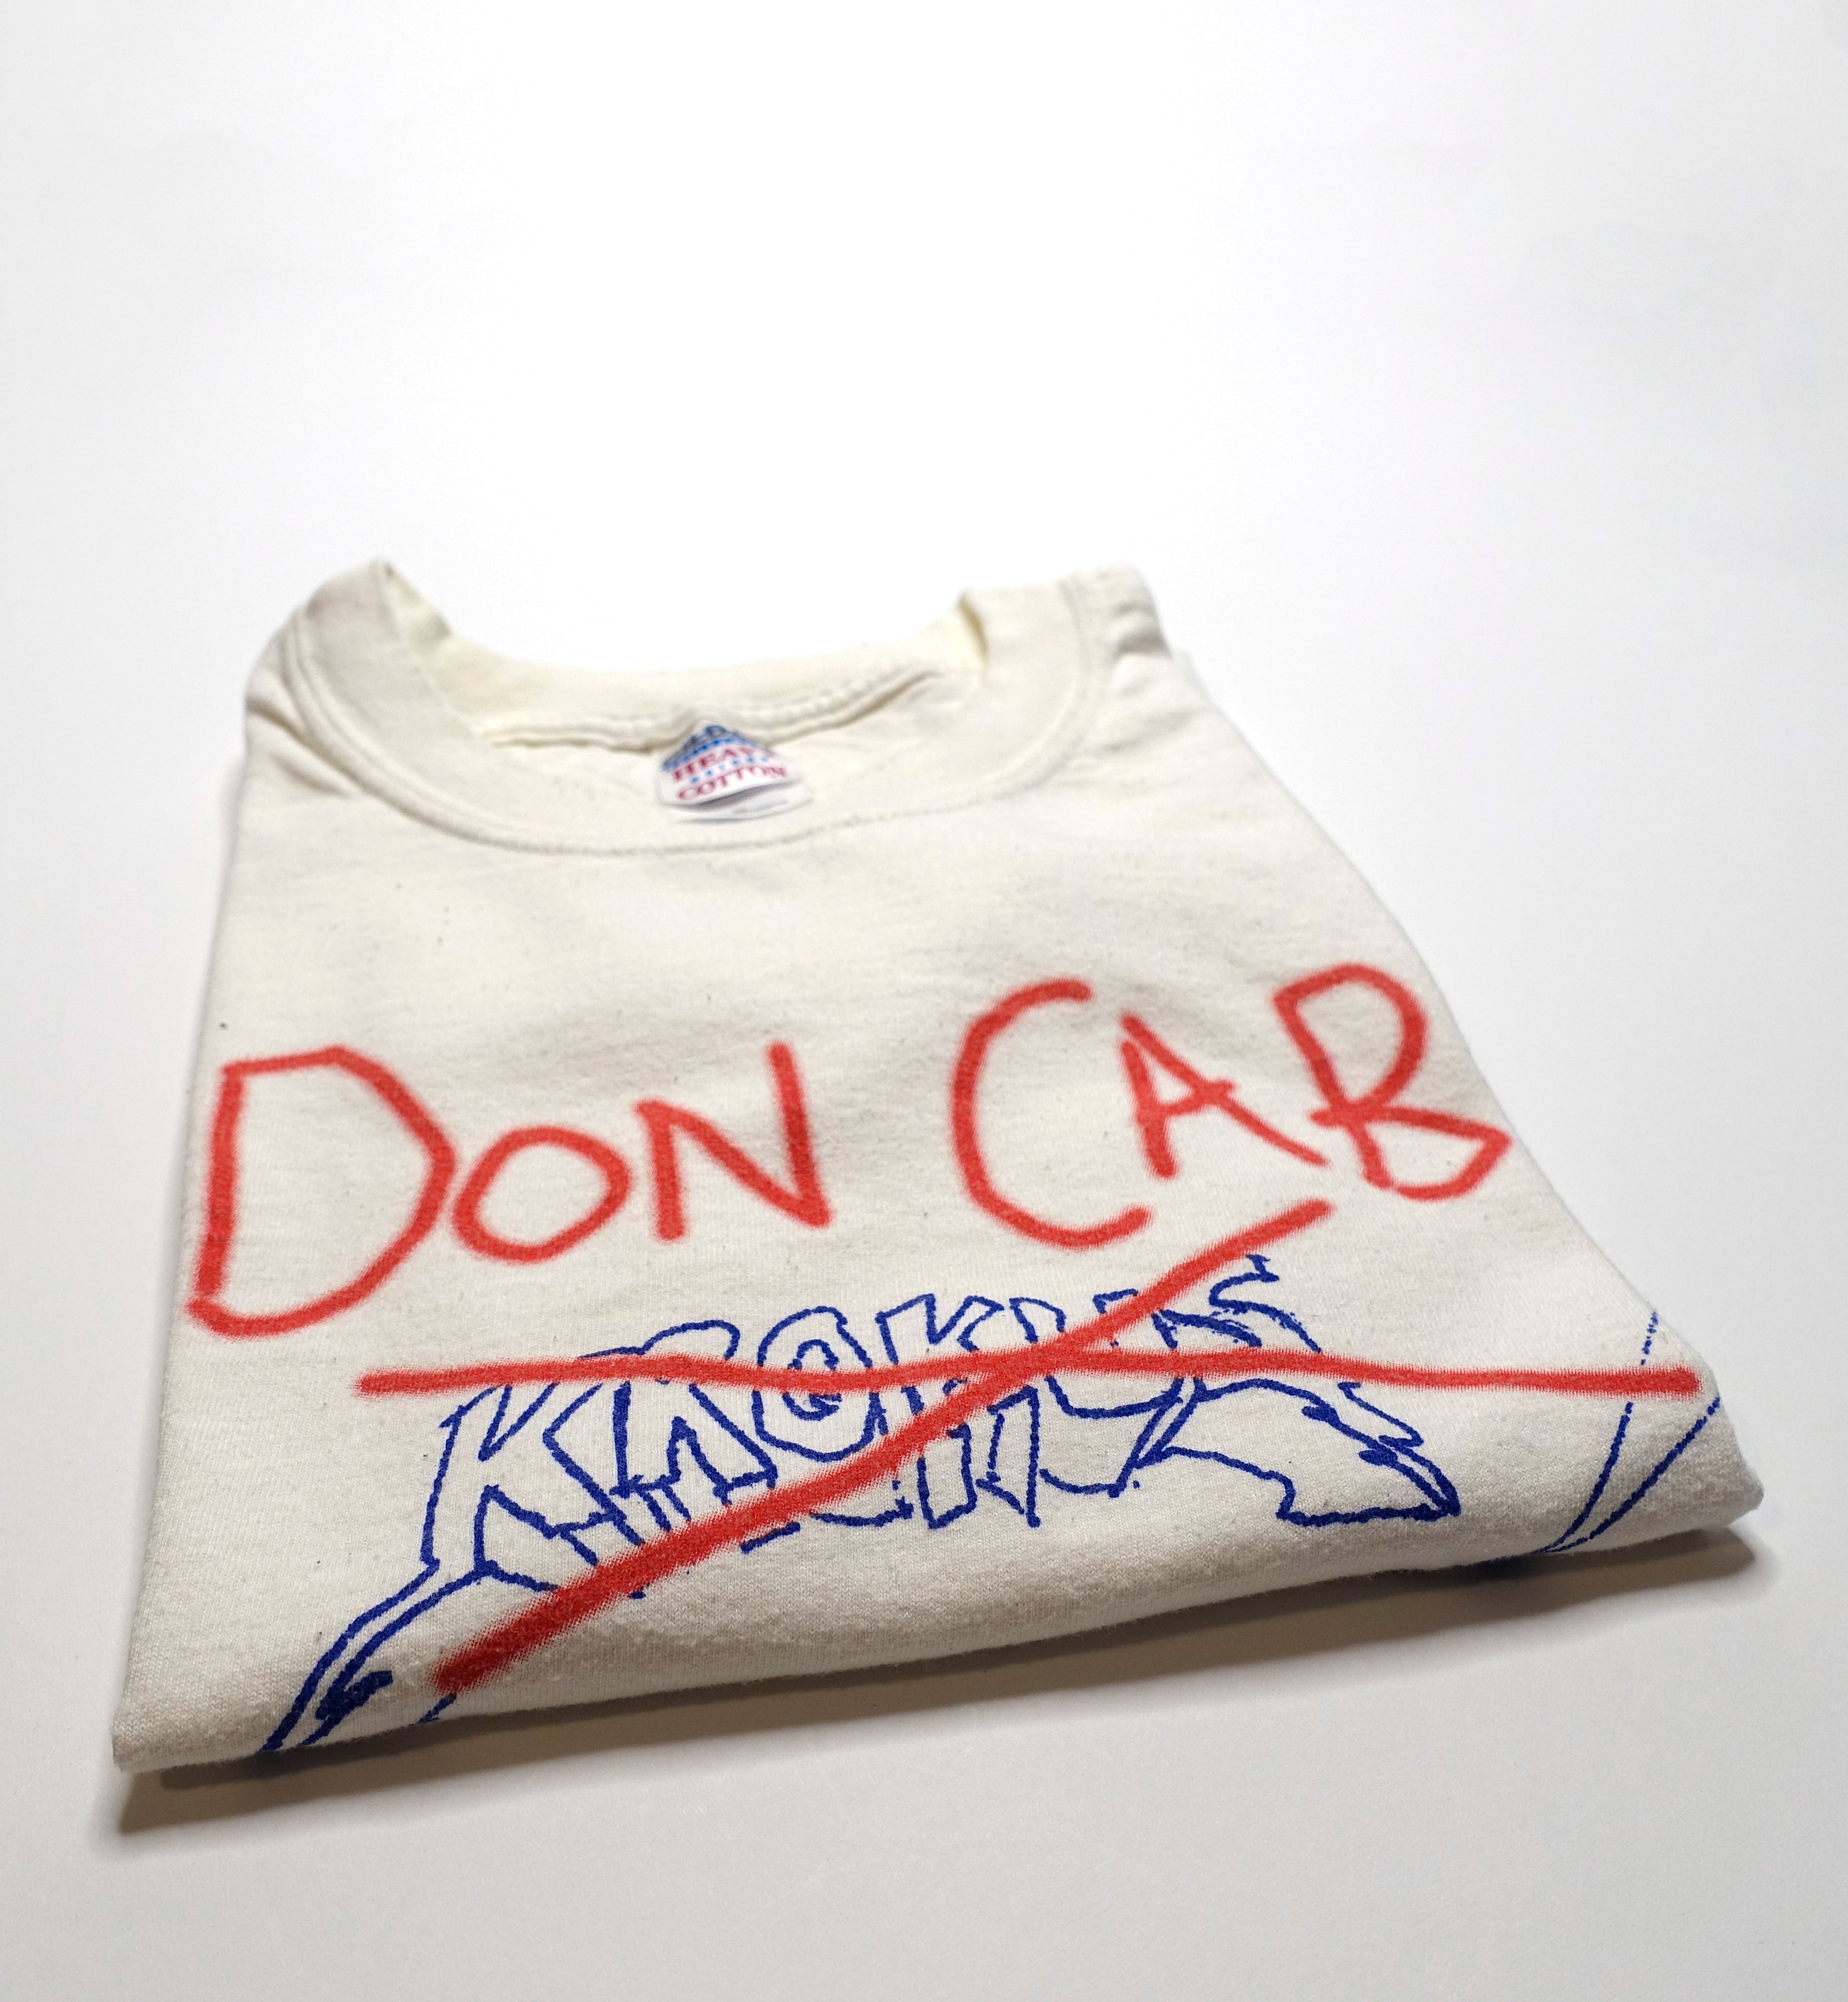 Don Caballero - Krokus Tour Shirt Size XL